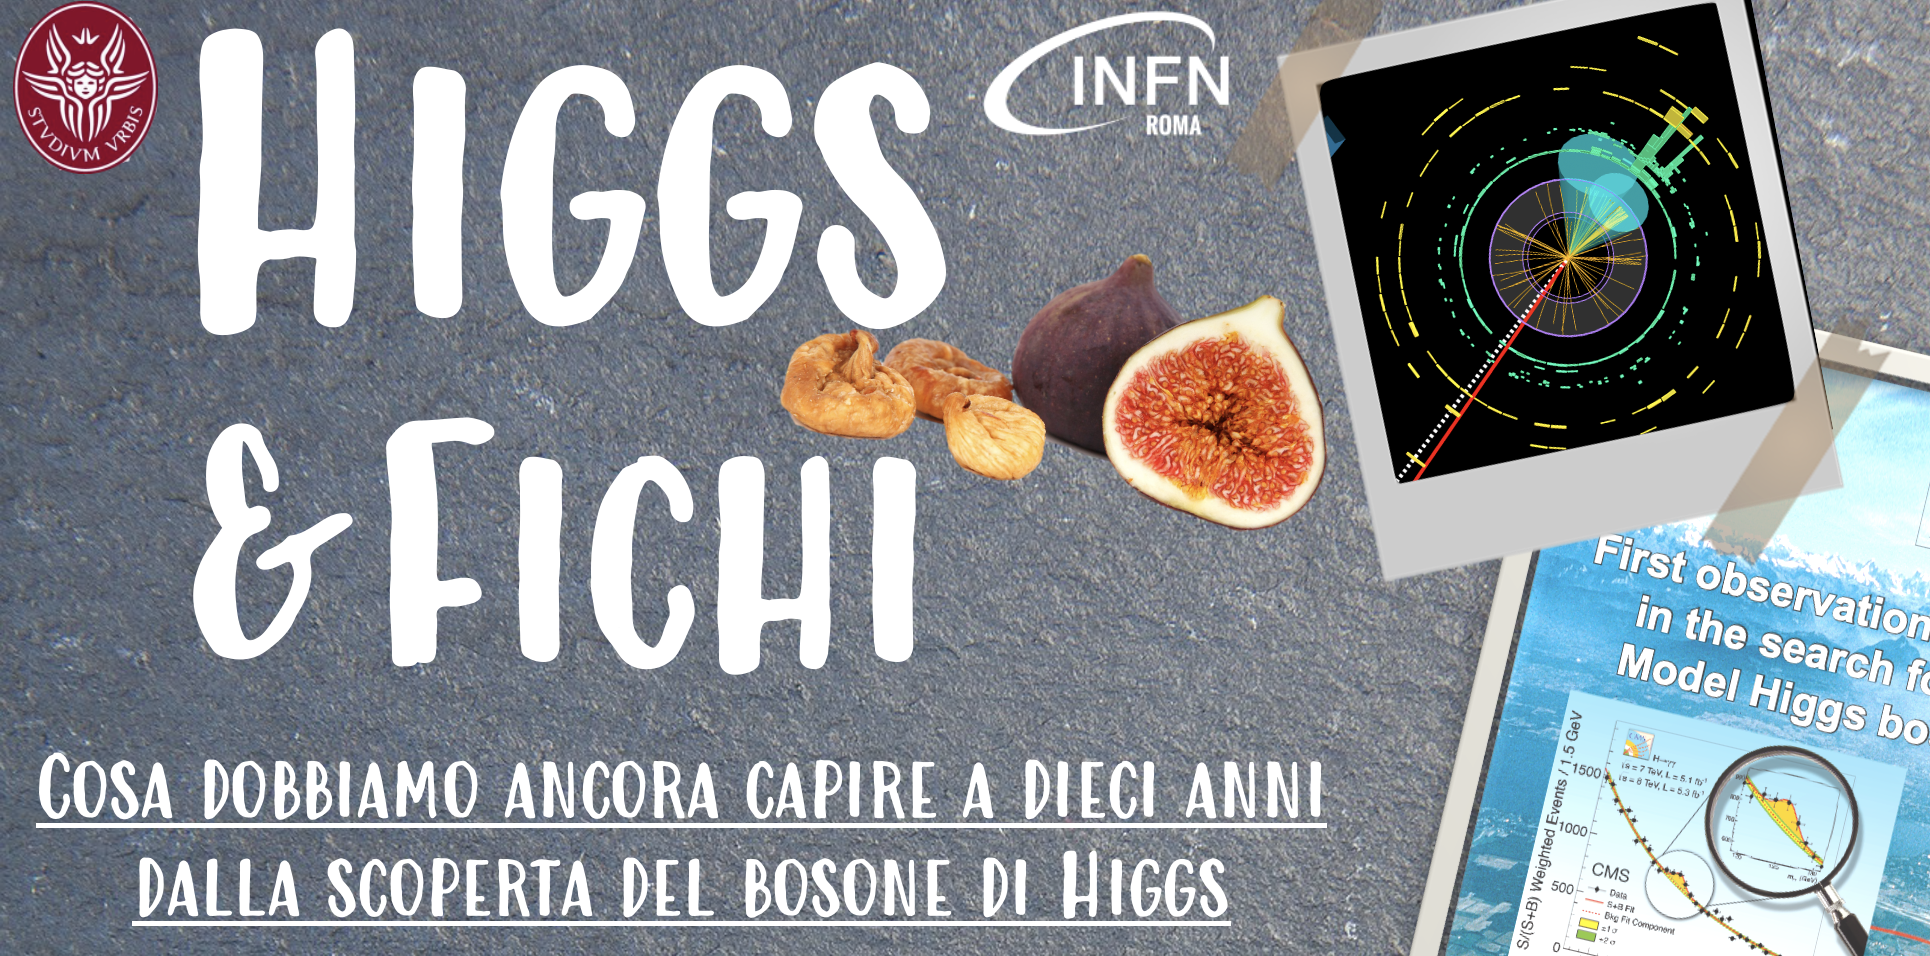 Higgs&Fichi